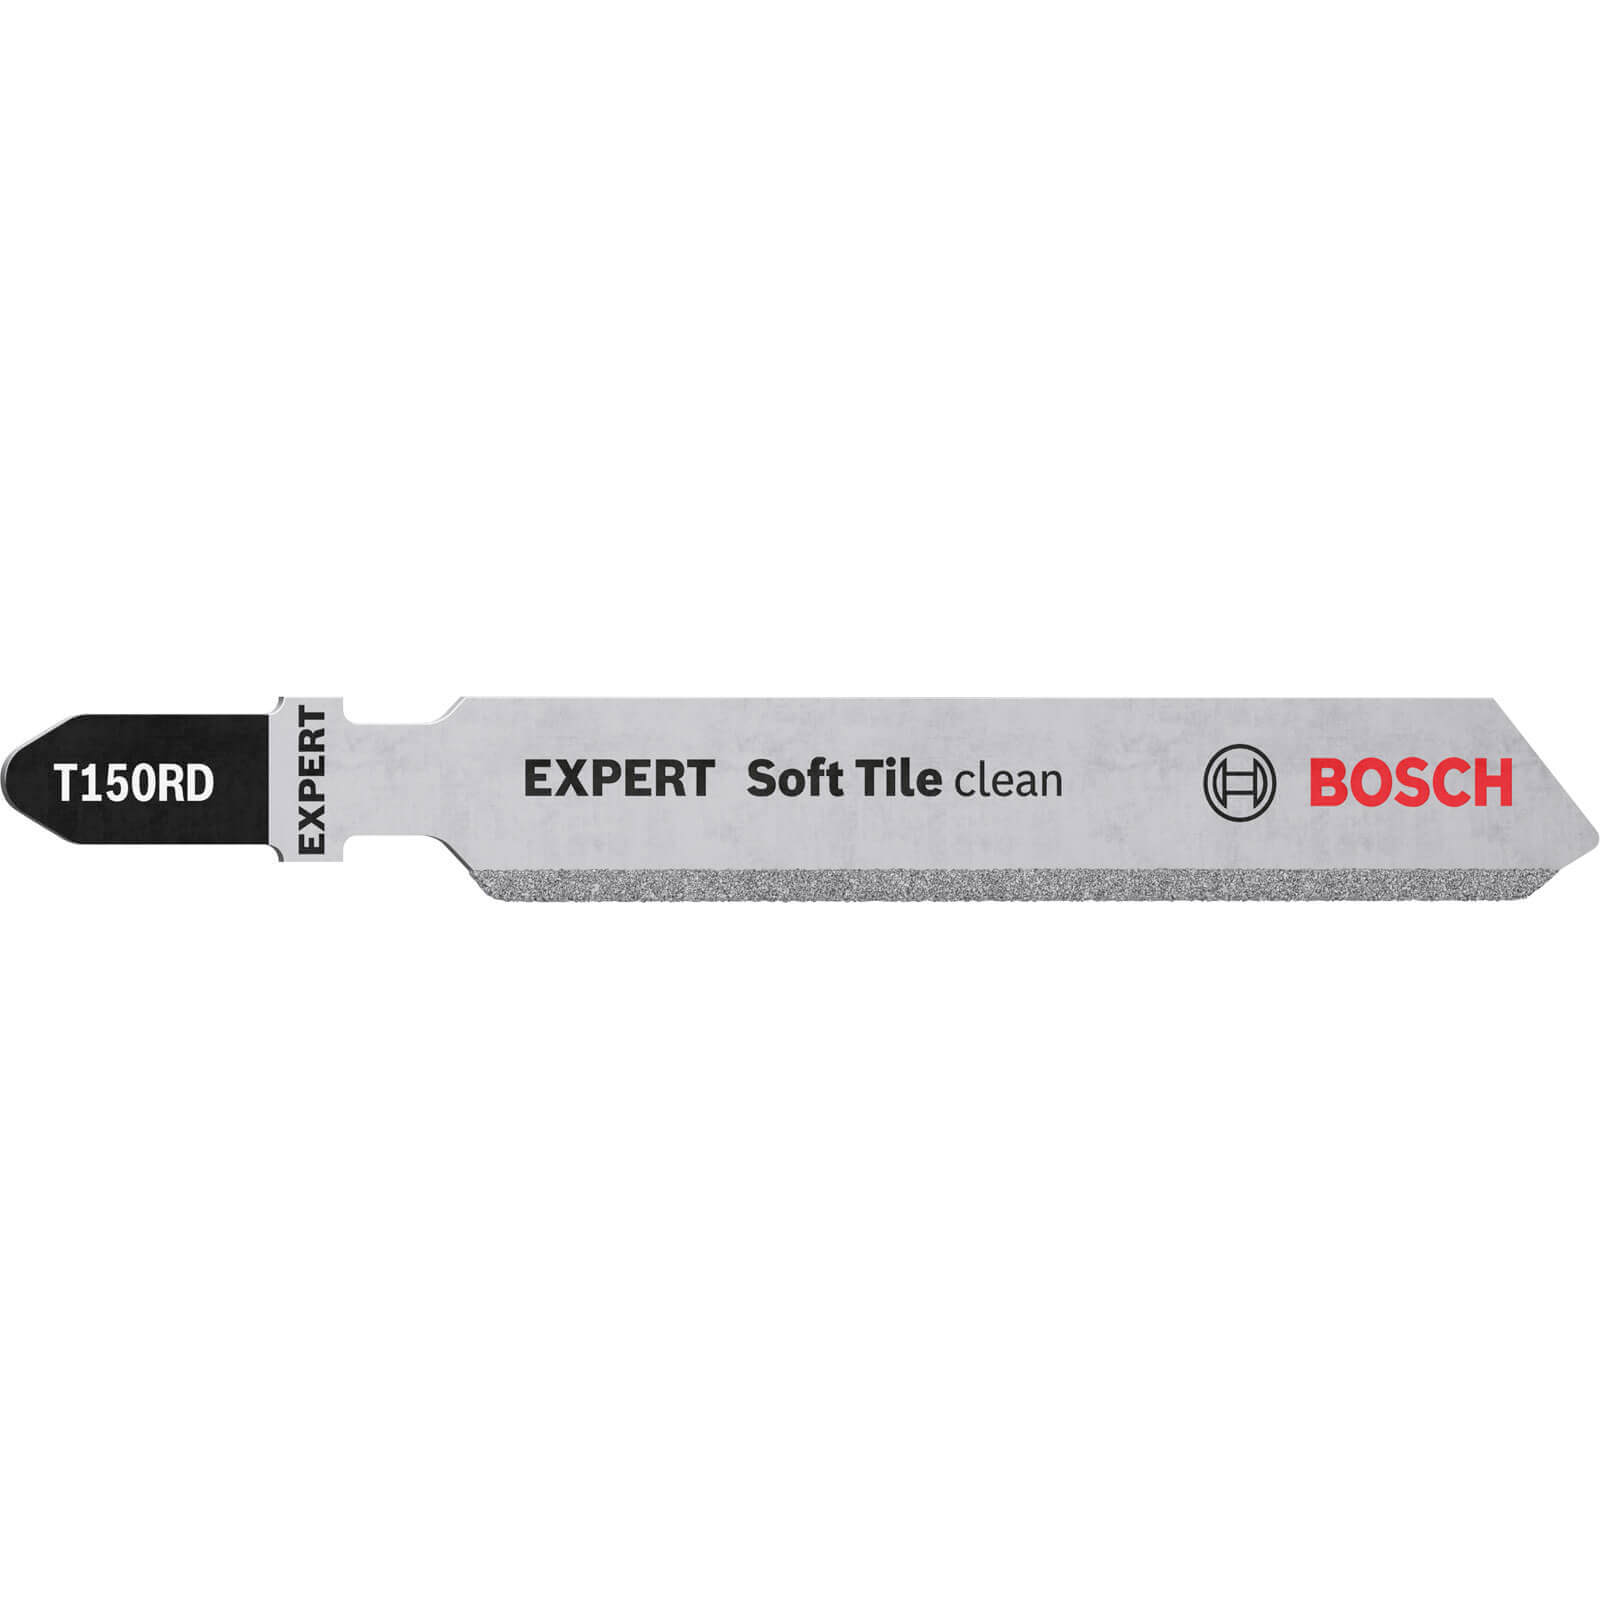 Image of Bosch Expert T150RD Soft Tile Clean Cut Jigsaw Blades Pack of 3